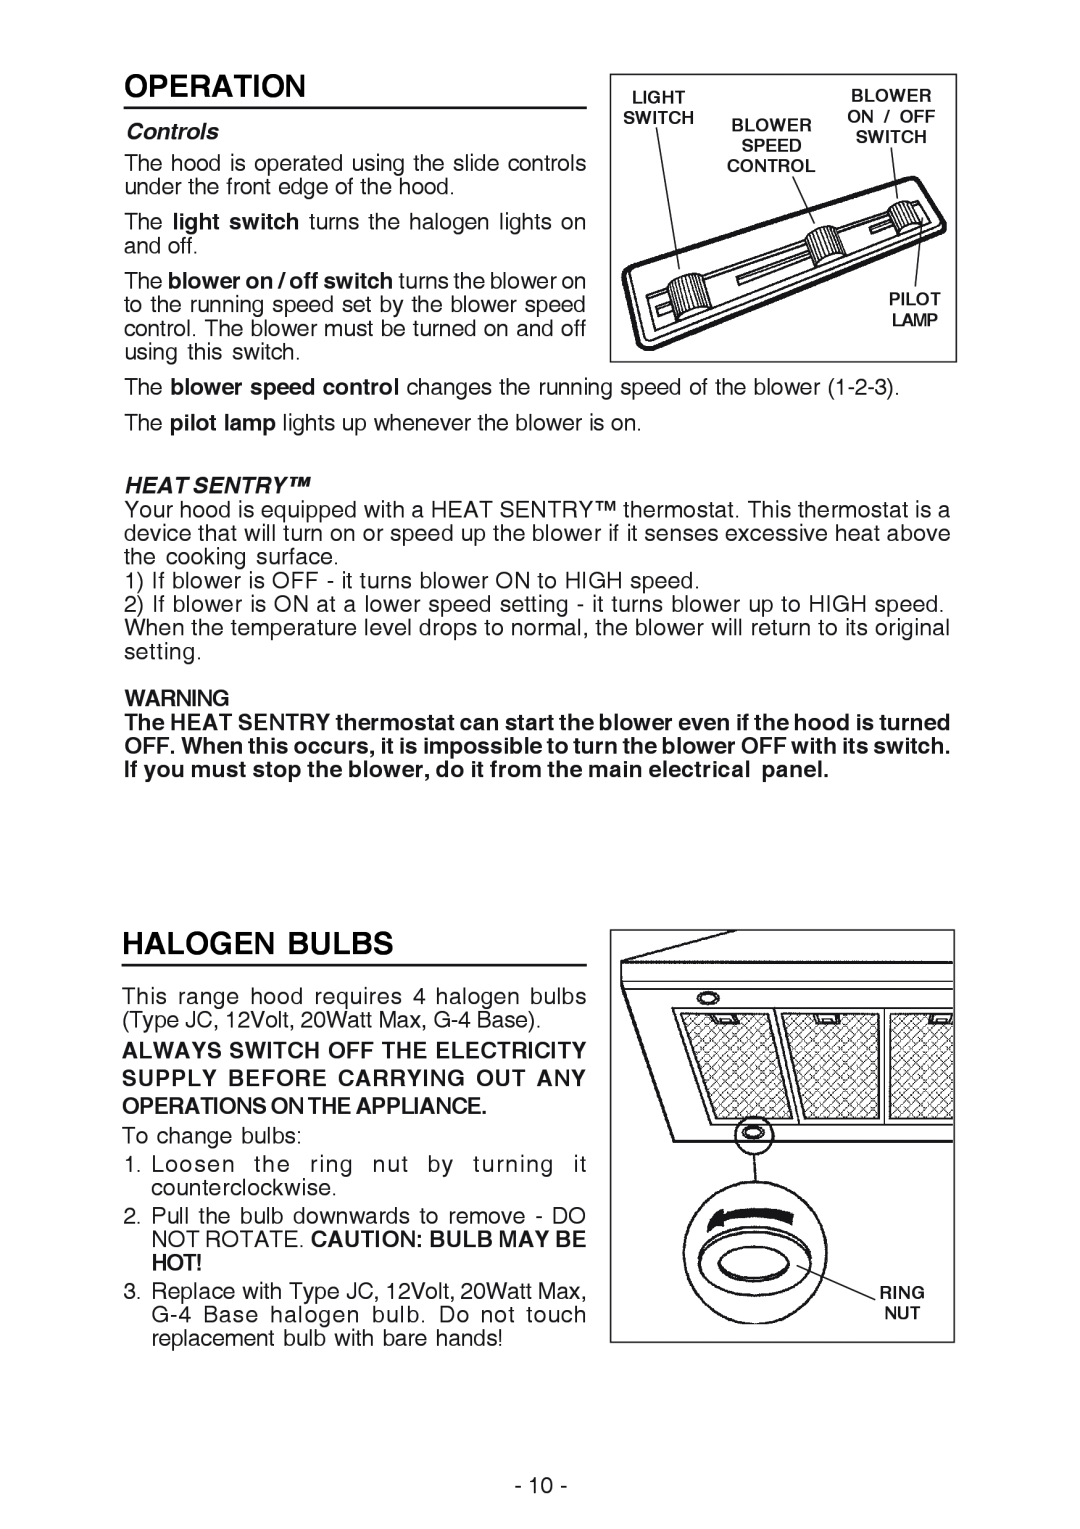 Broan 637004 manual Operation, Halogen Bulbs, Controls, Heat Sentry 